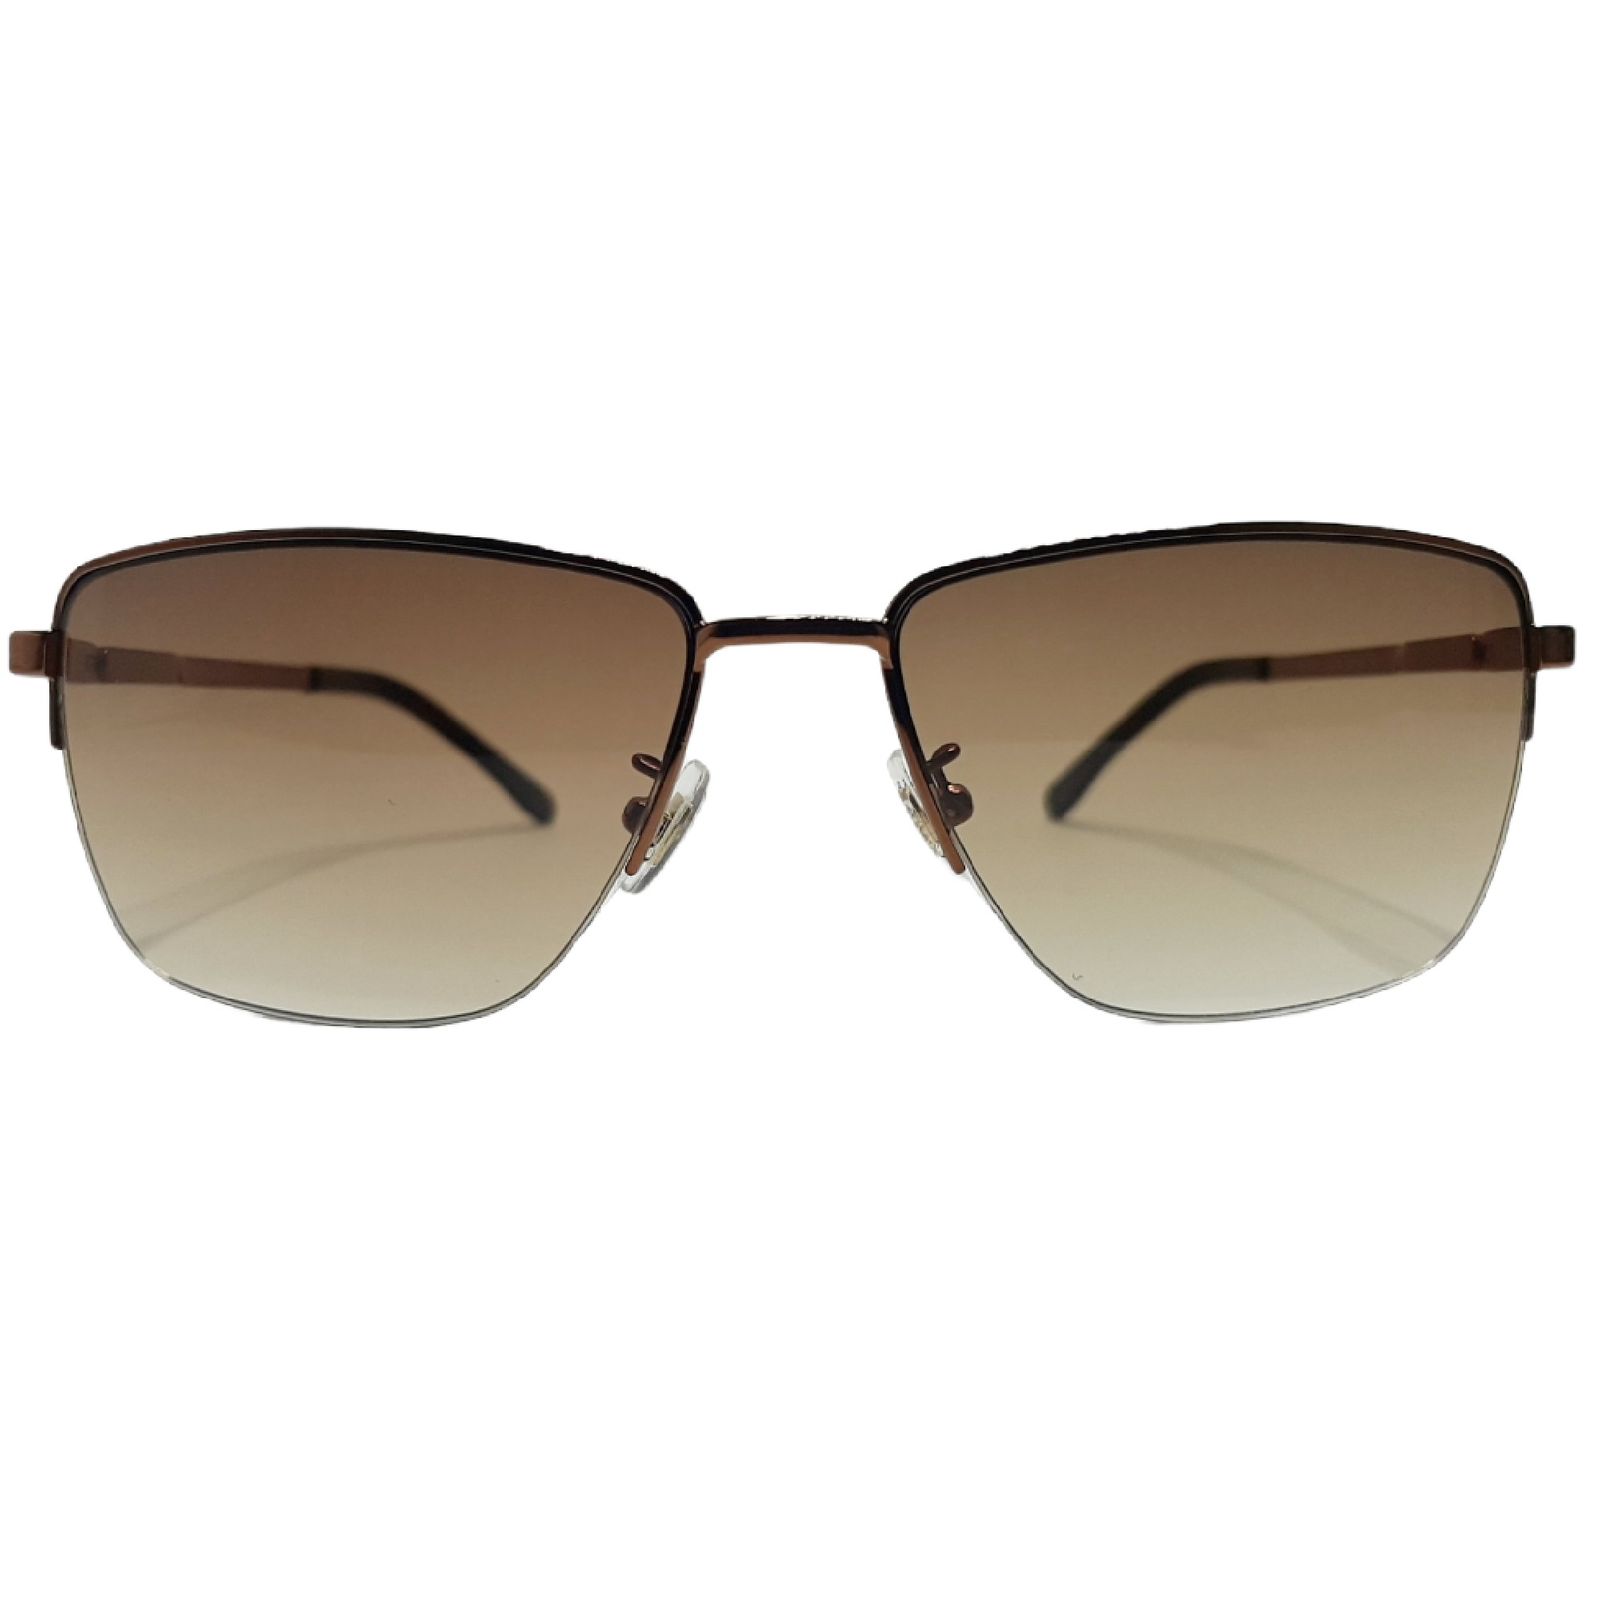 عینک آفتابی هوگو باس مدل HB1074c5 -  - 1